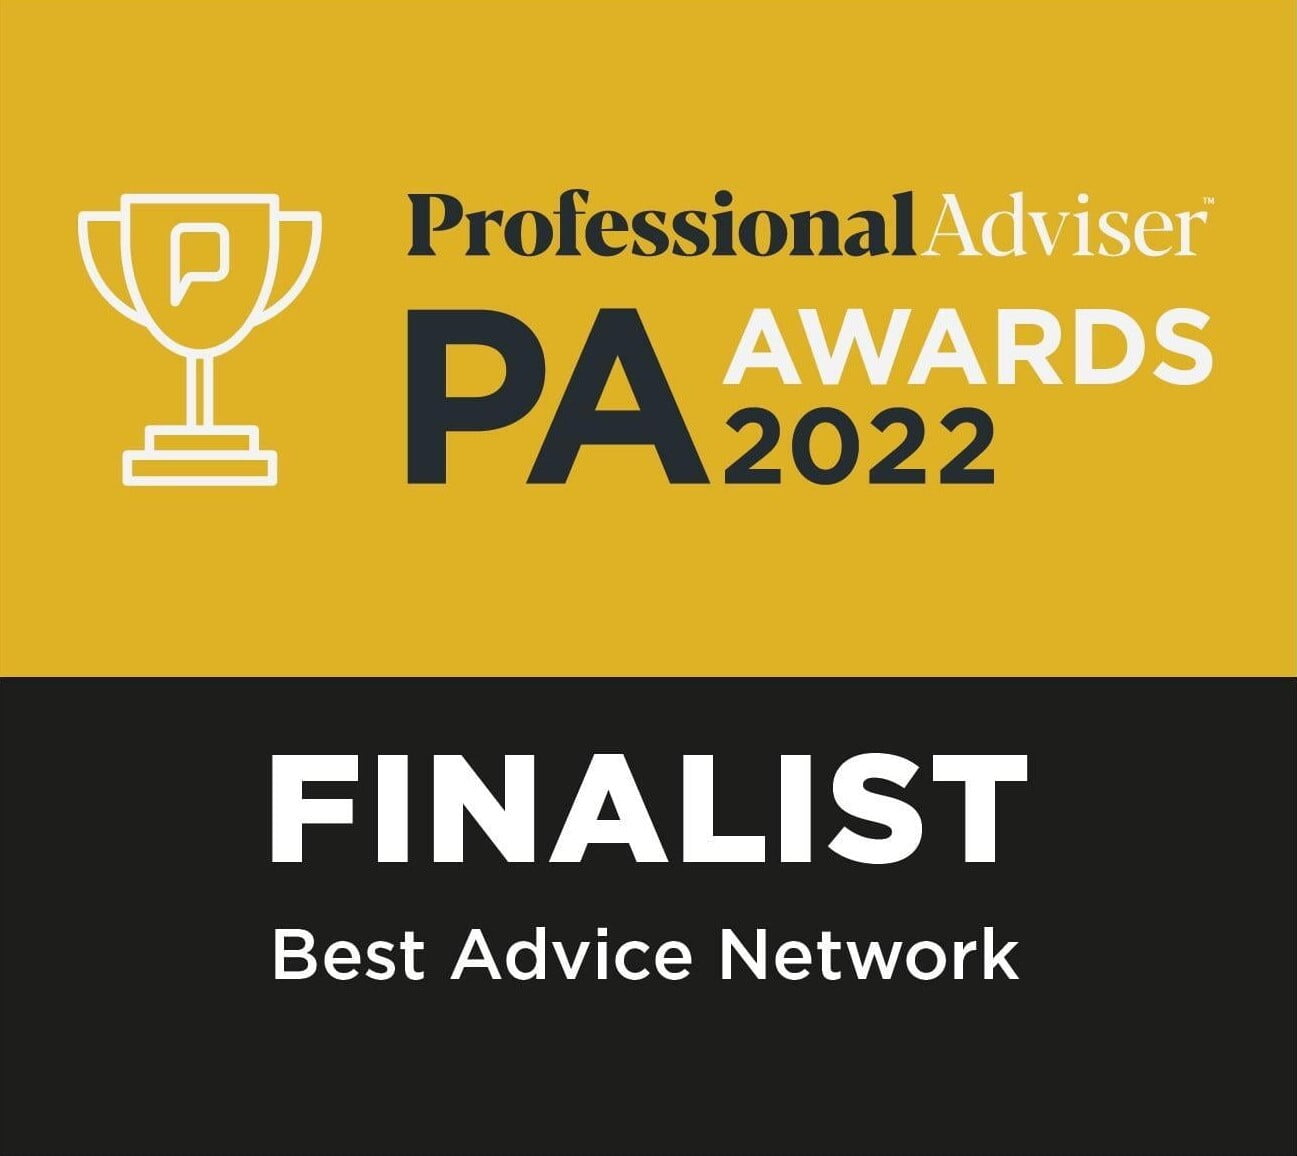 Professional Adviser Awards Finalist Logo 2022